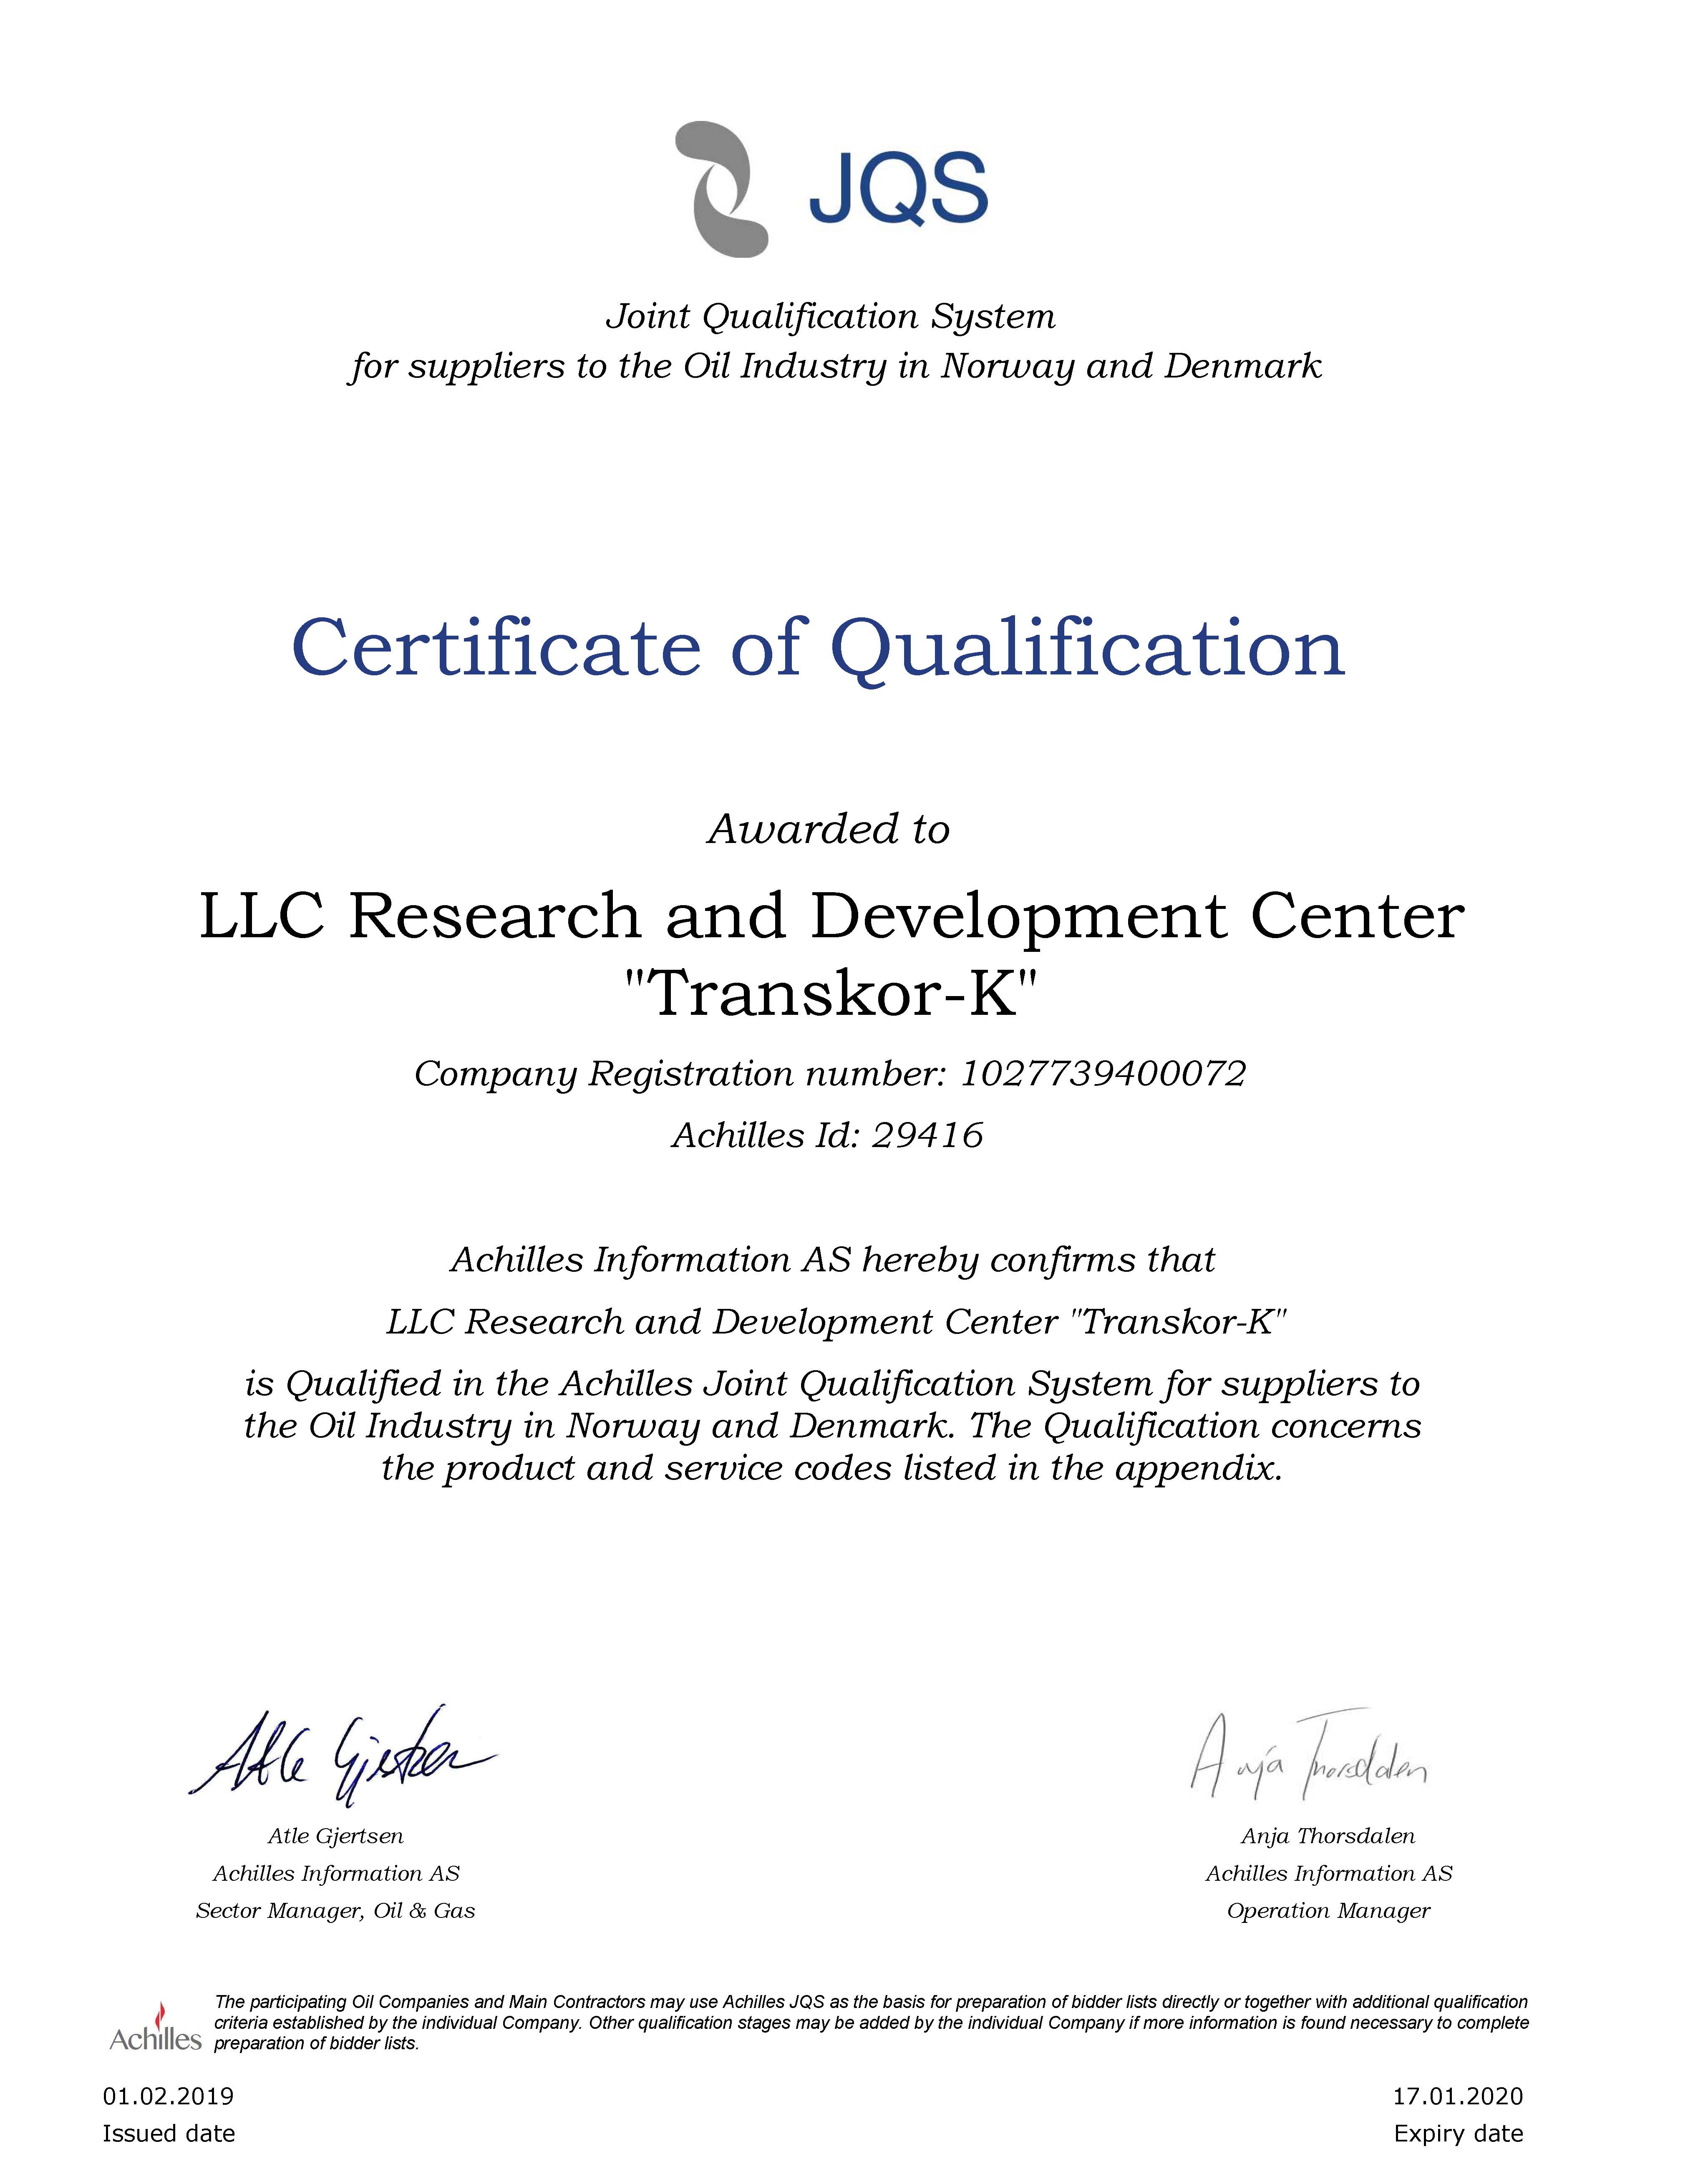 ACHILLES certificate until 17.01.2020